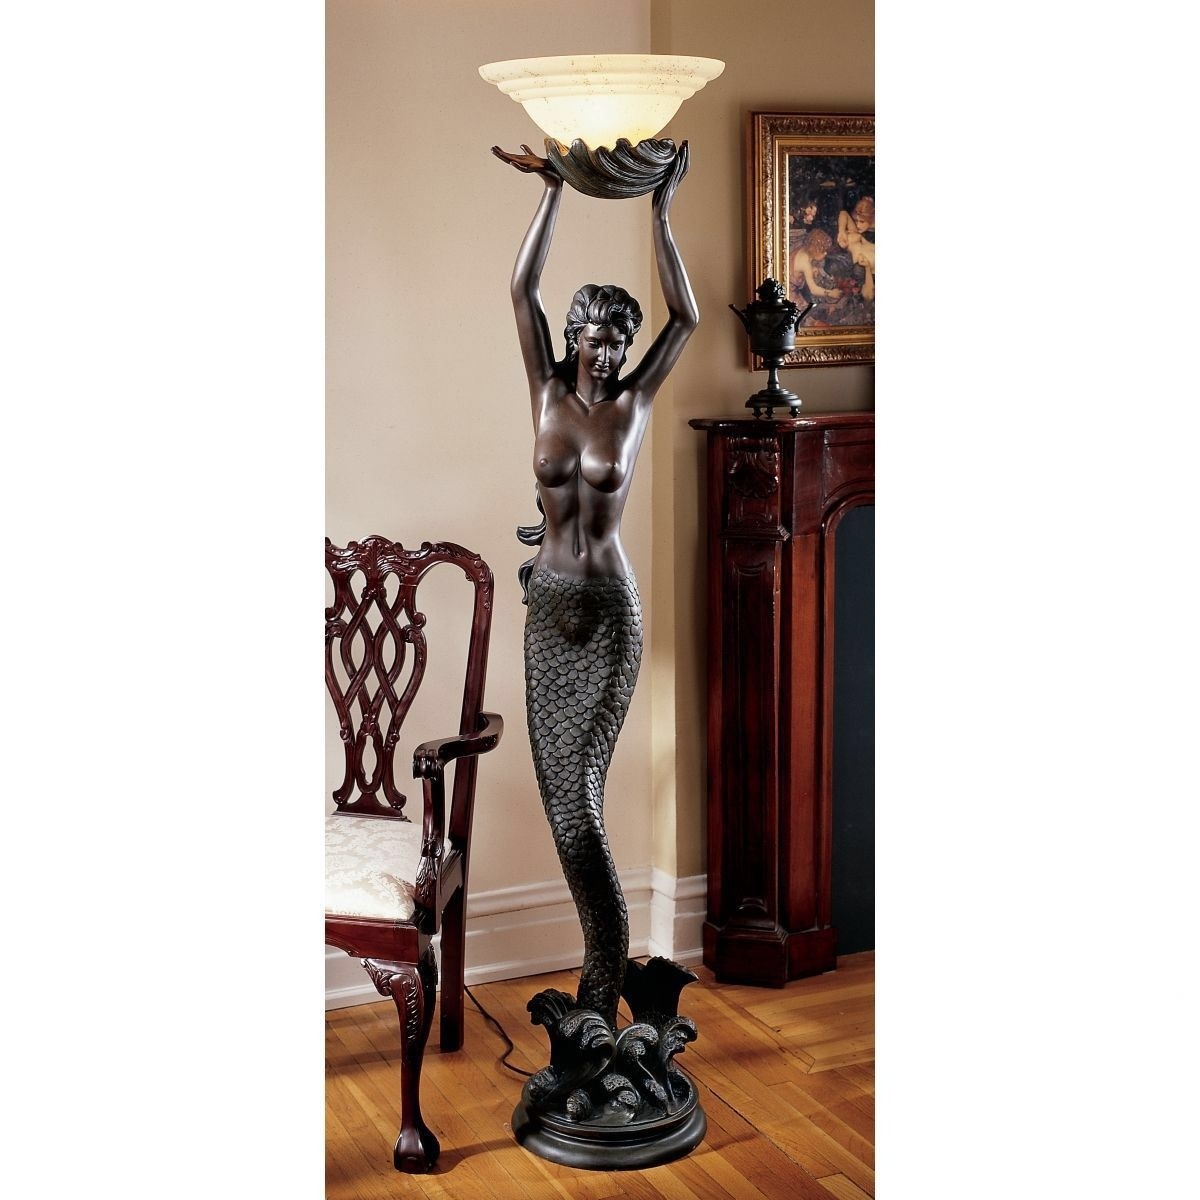 Mermaid table lamp